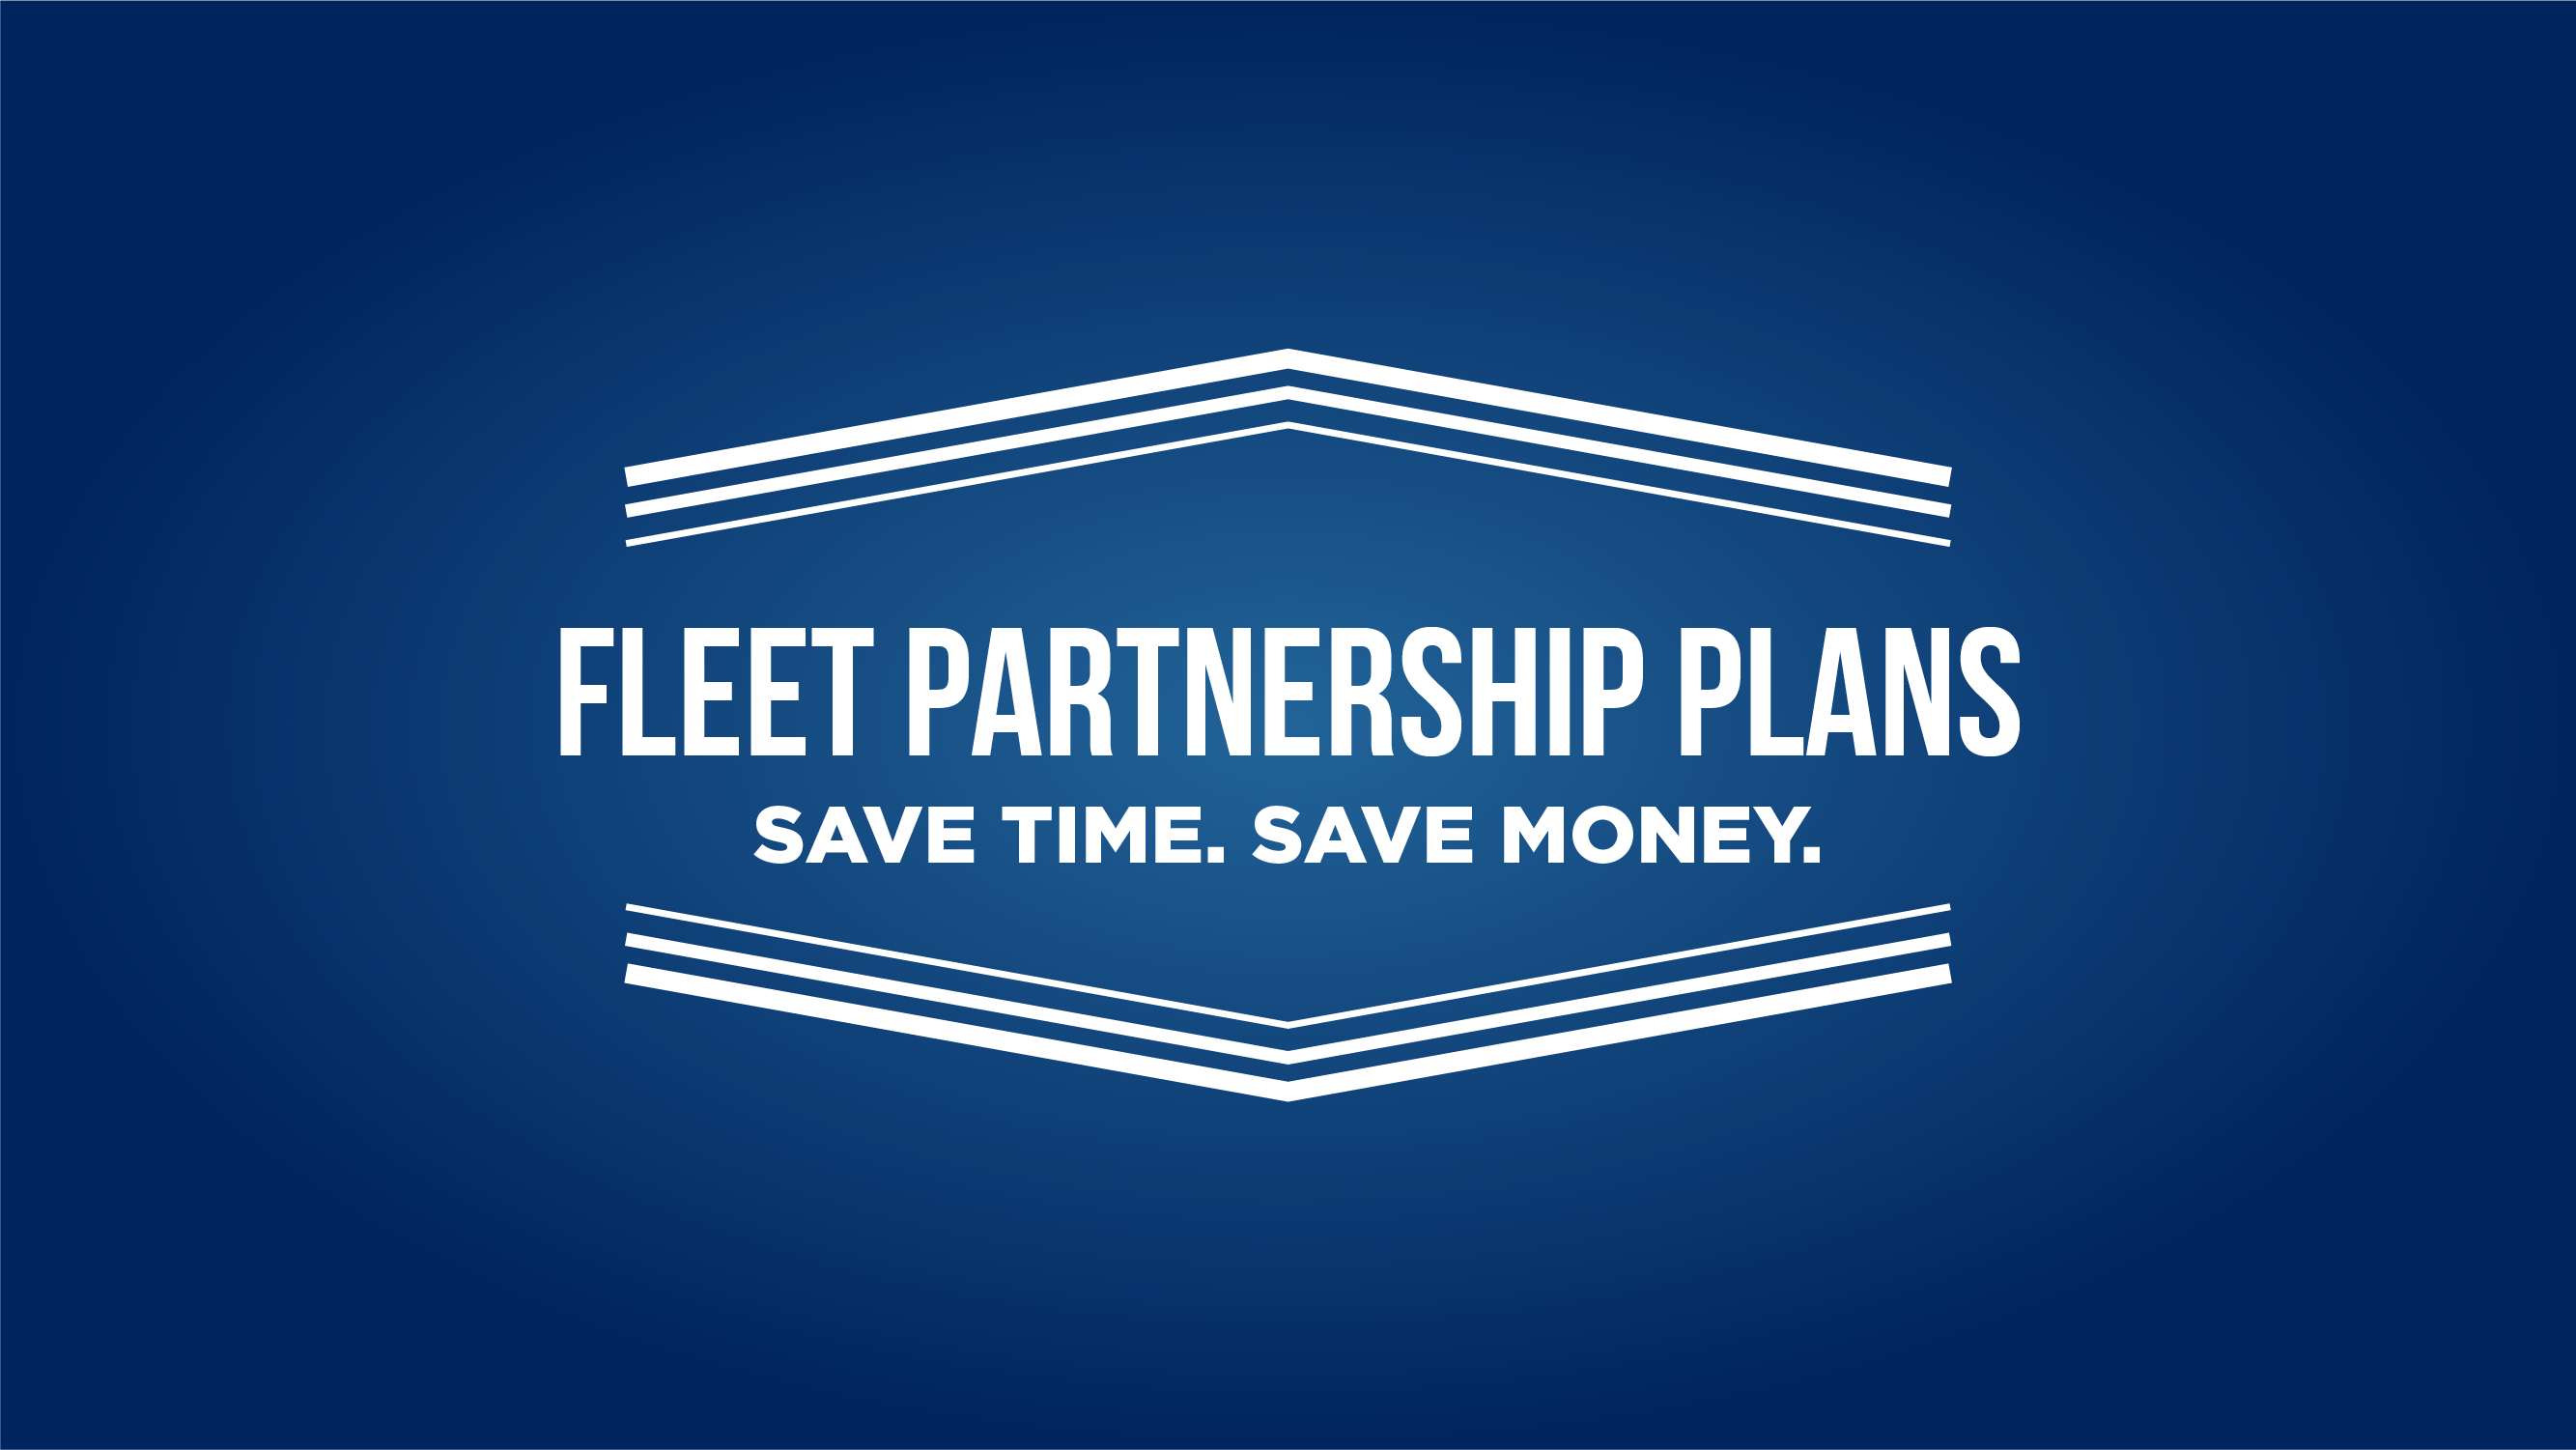 Fleet Partnership Plans